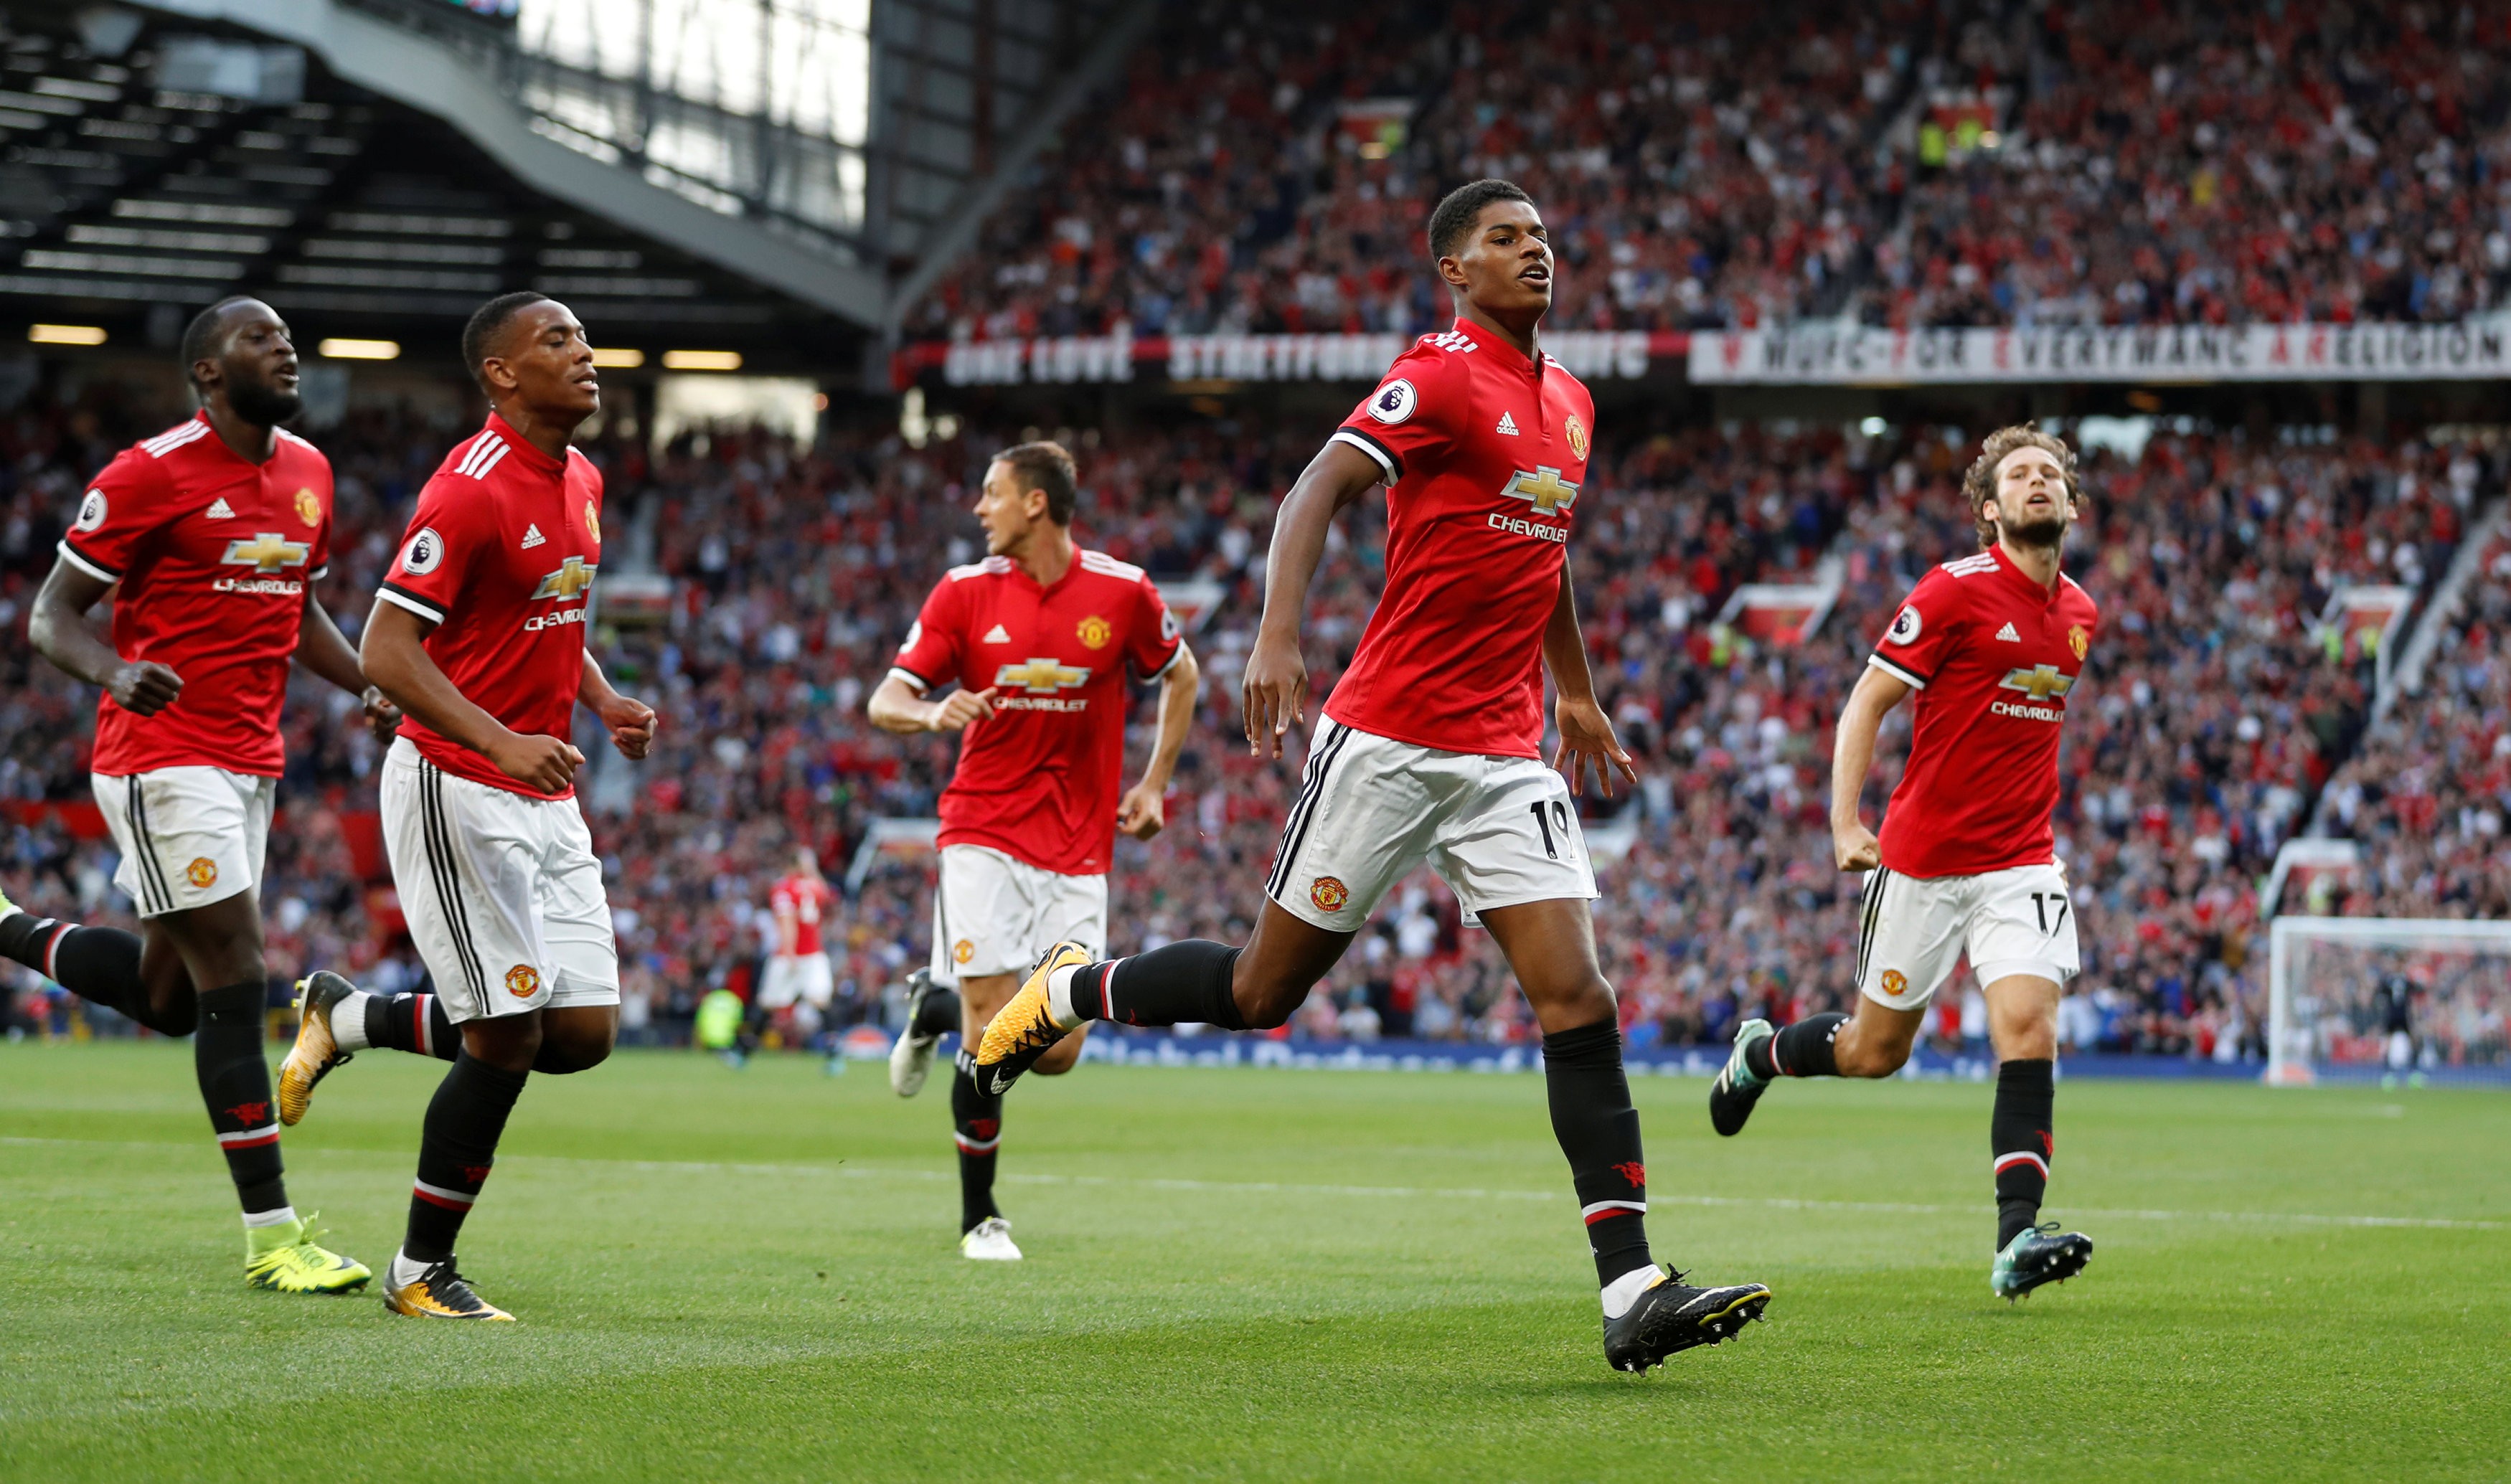 Manchester United's Marcus Rashford celebrates scoring. Photo: Reuters